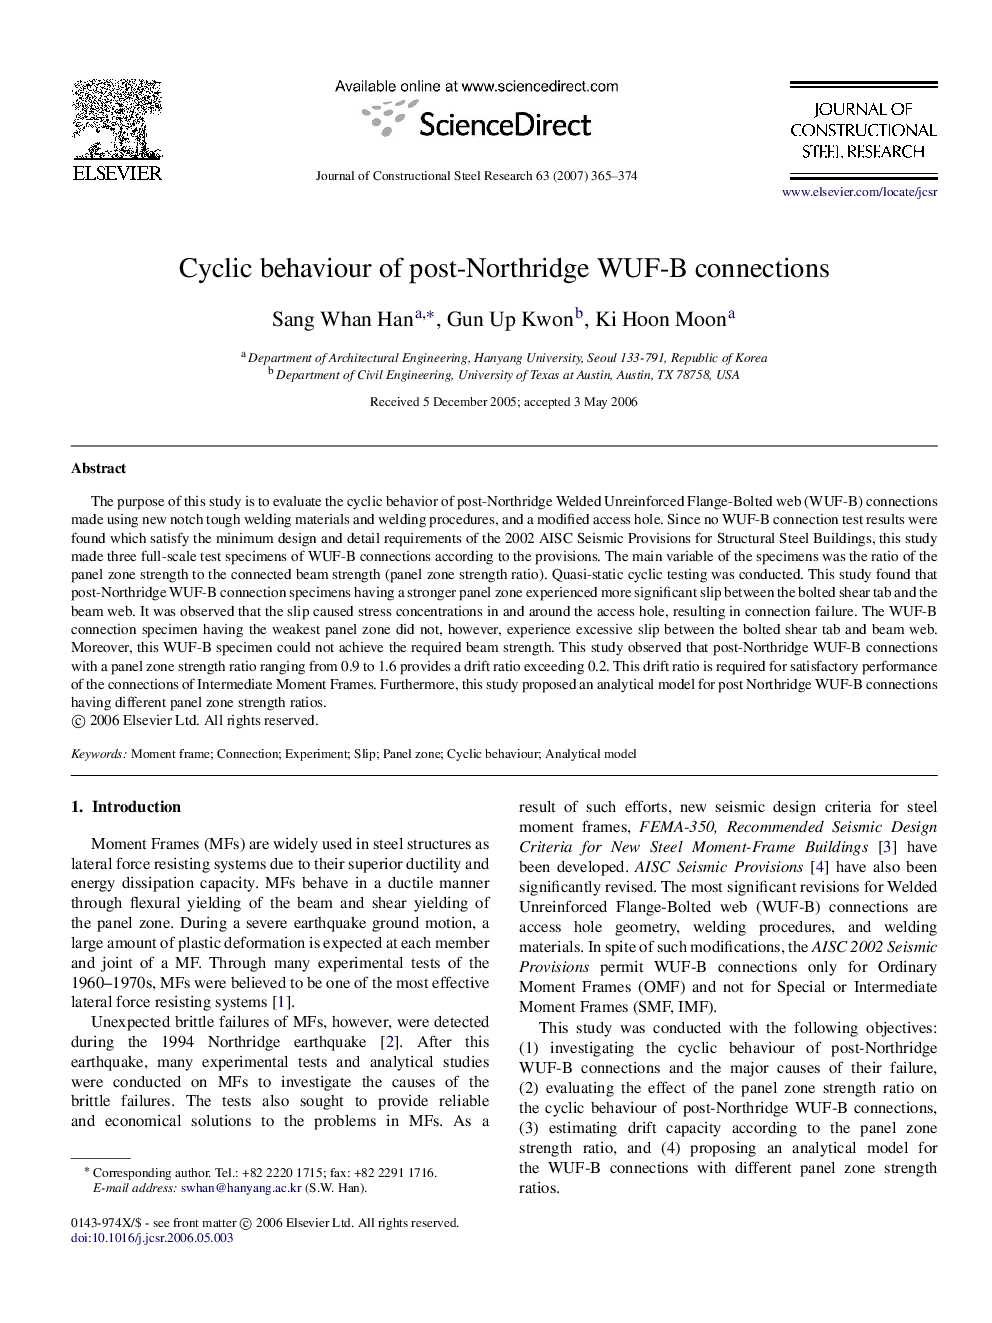 Cyclic behaviour of post-Northridge WUF-B connections